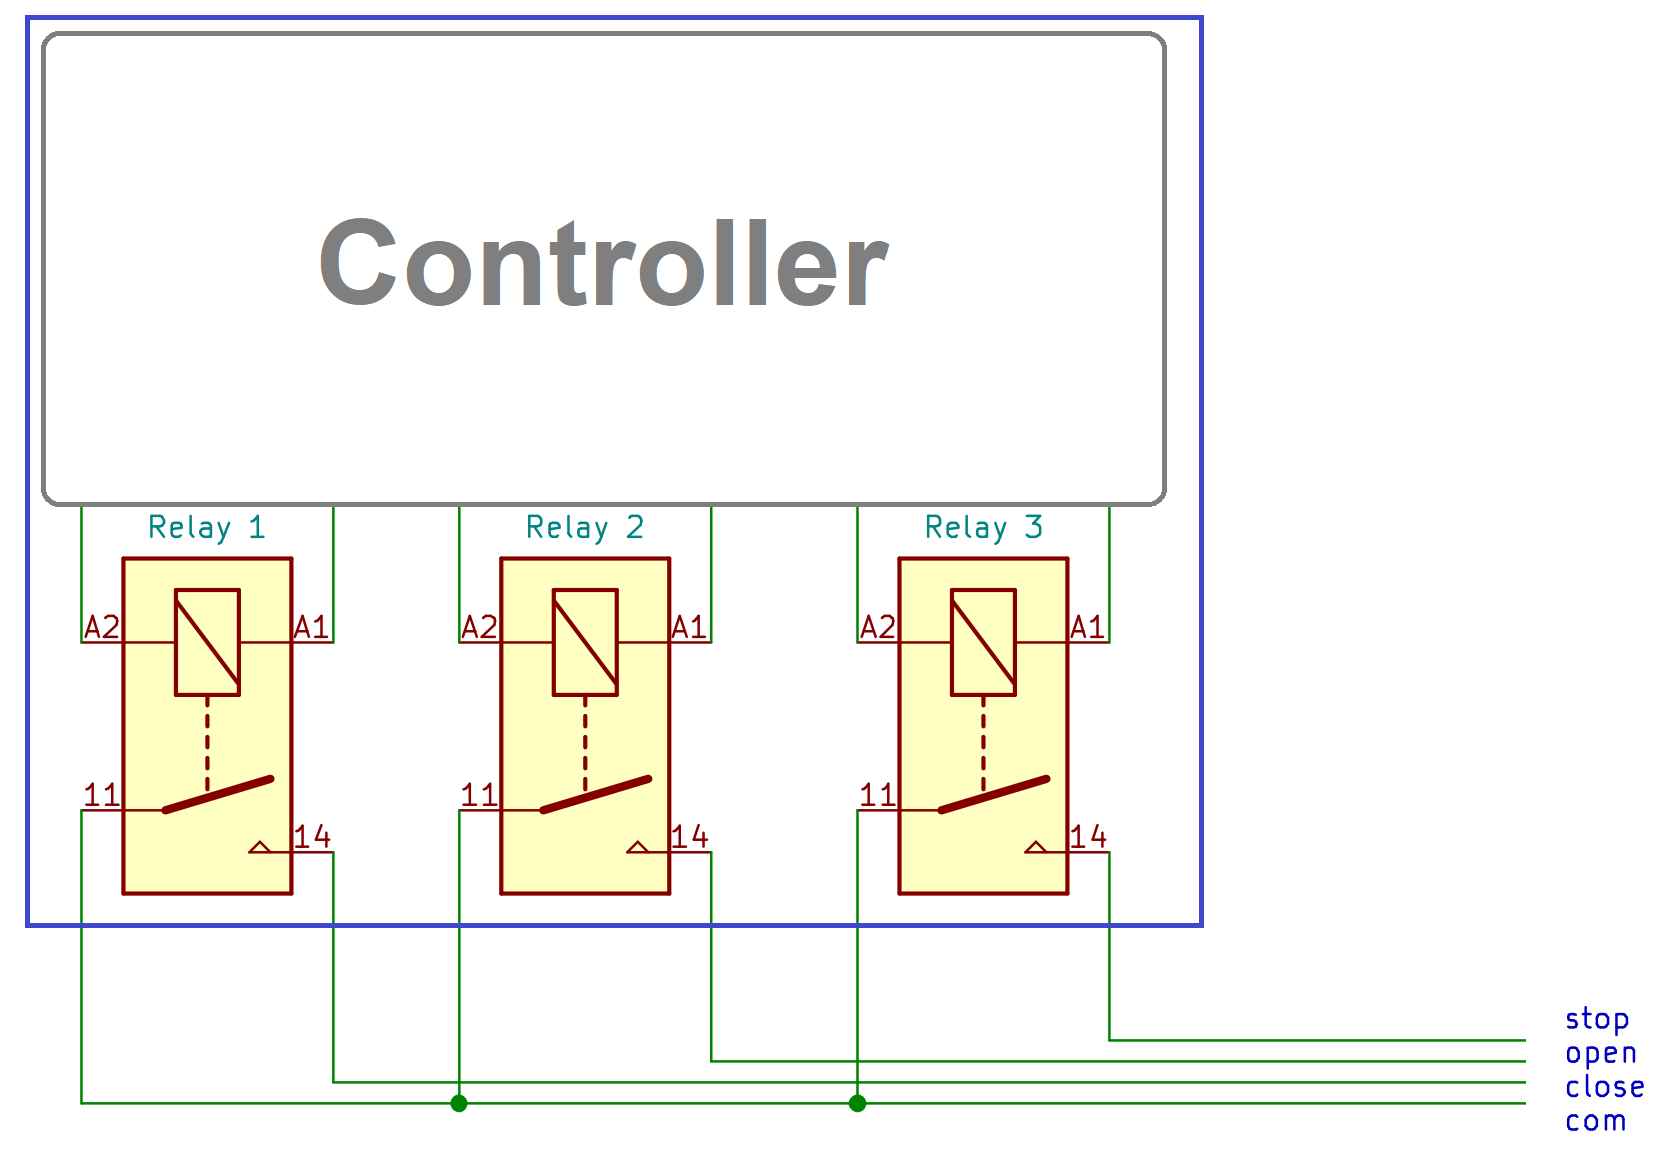 Dry contact control logic diagram.png